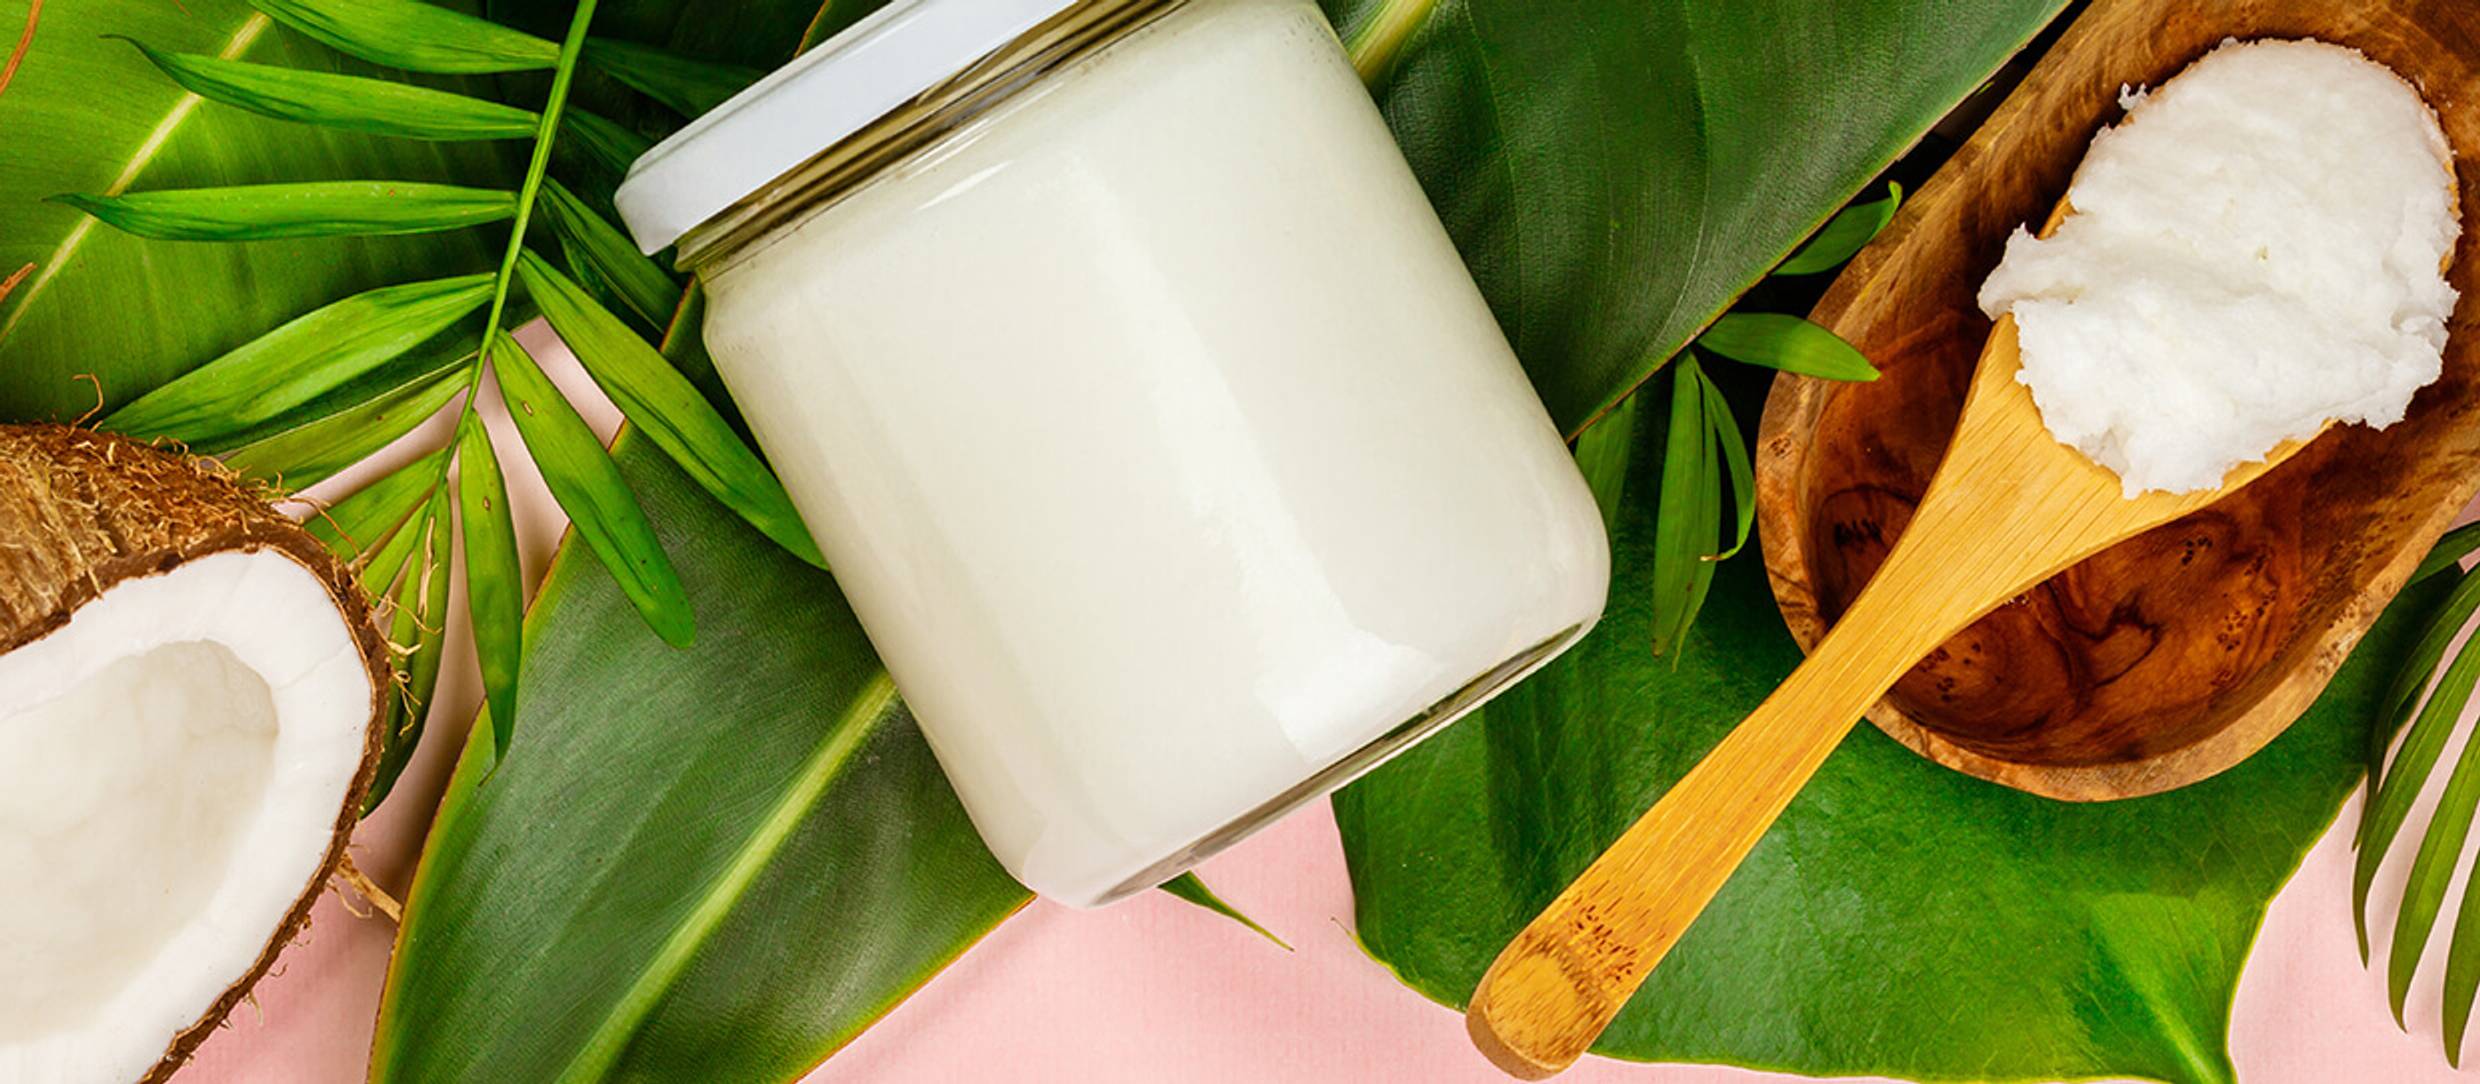 Un-fractionated coconut massage oil in jar vs Holly Massage Oil